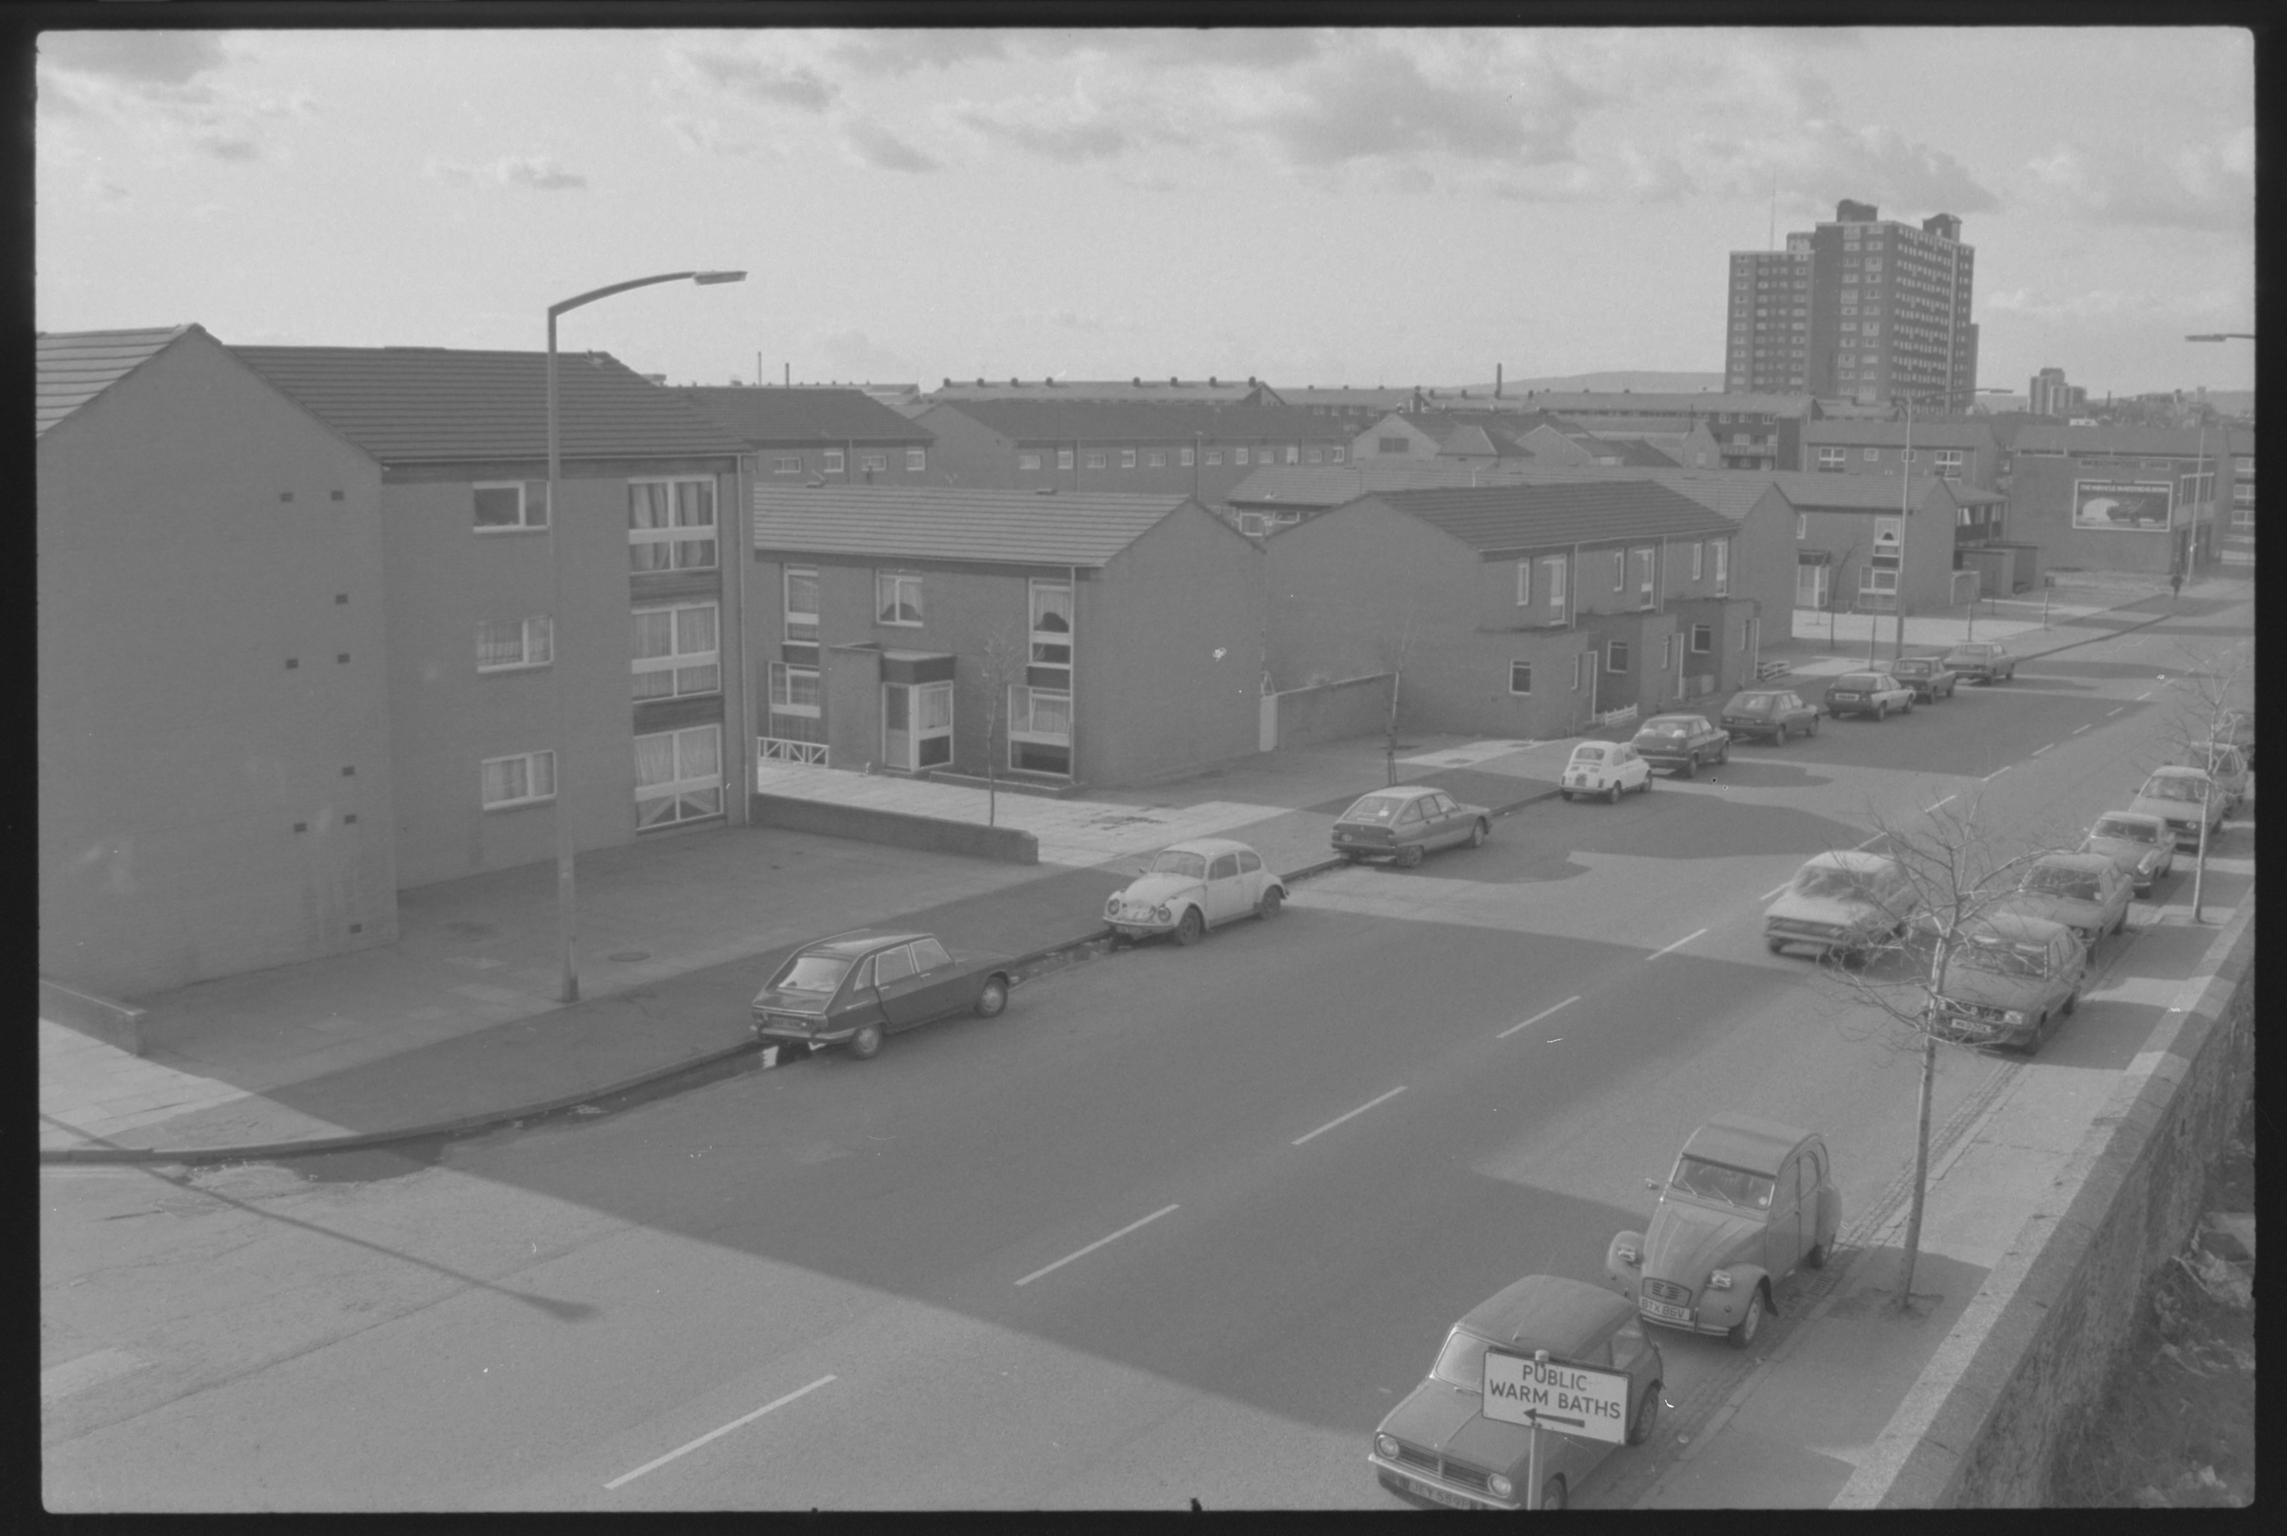 Bute Road Station, Cardiff, film negative